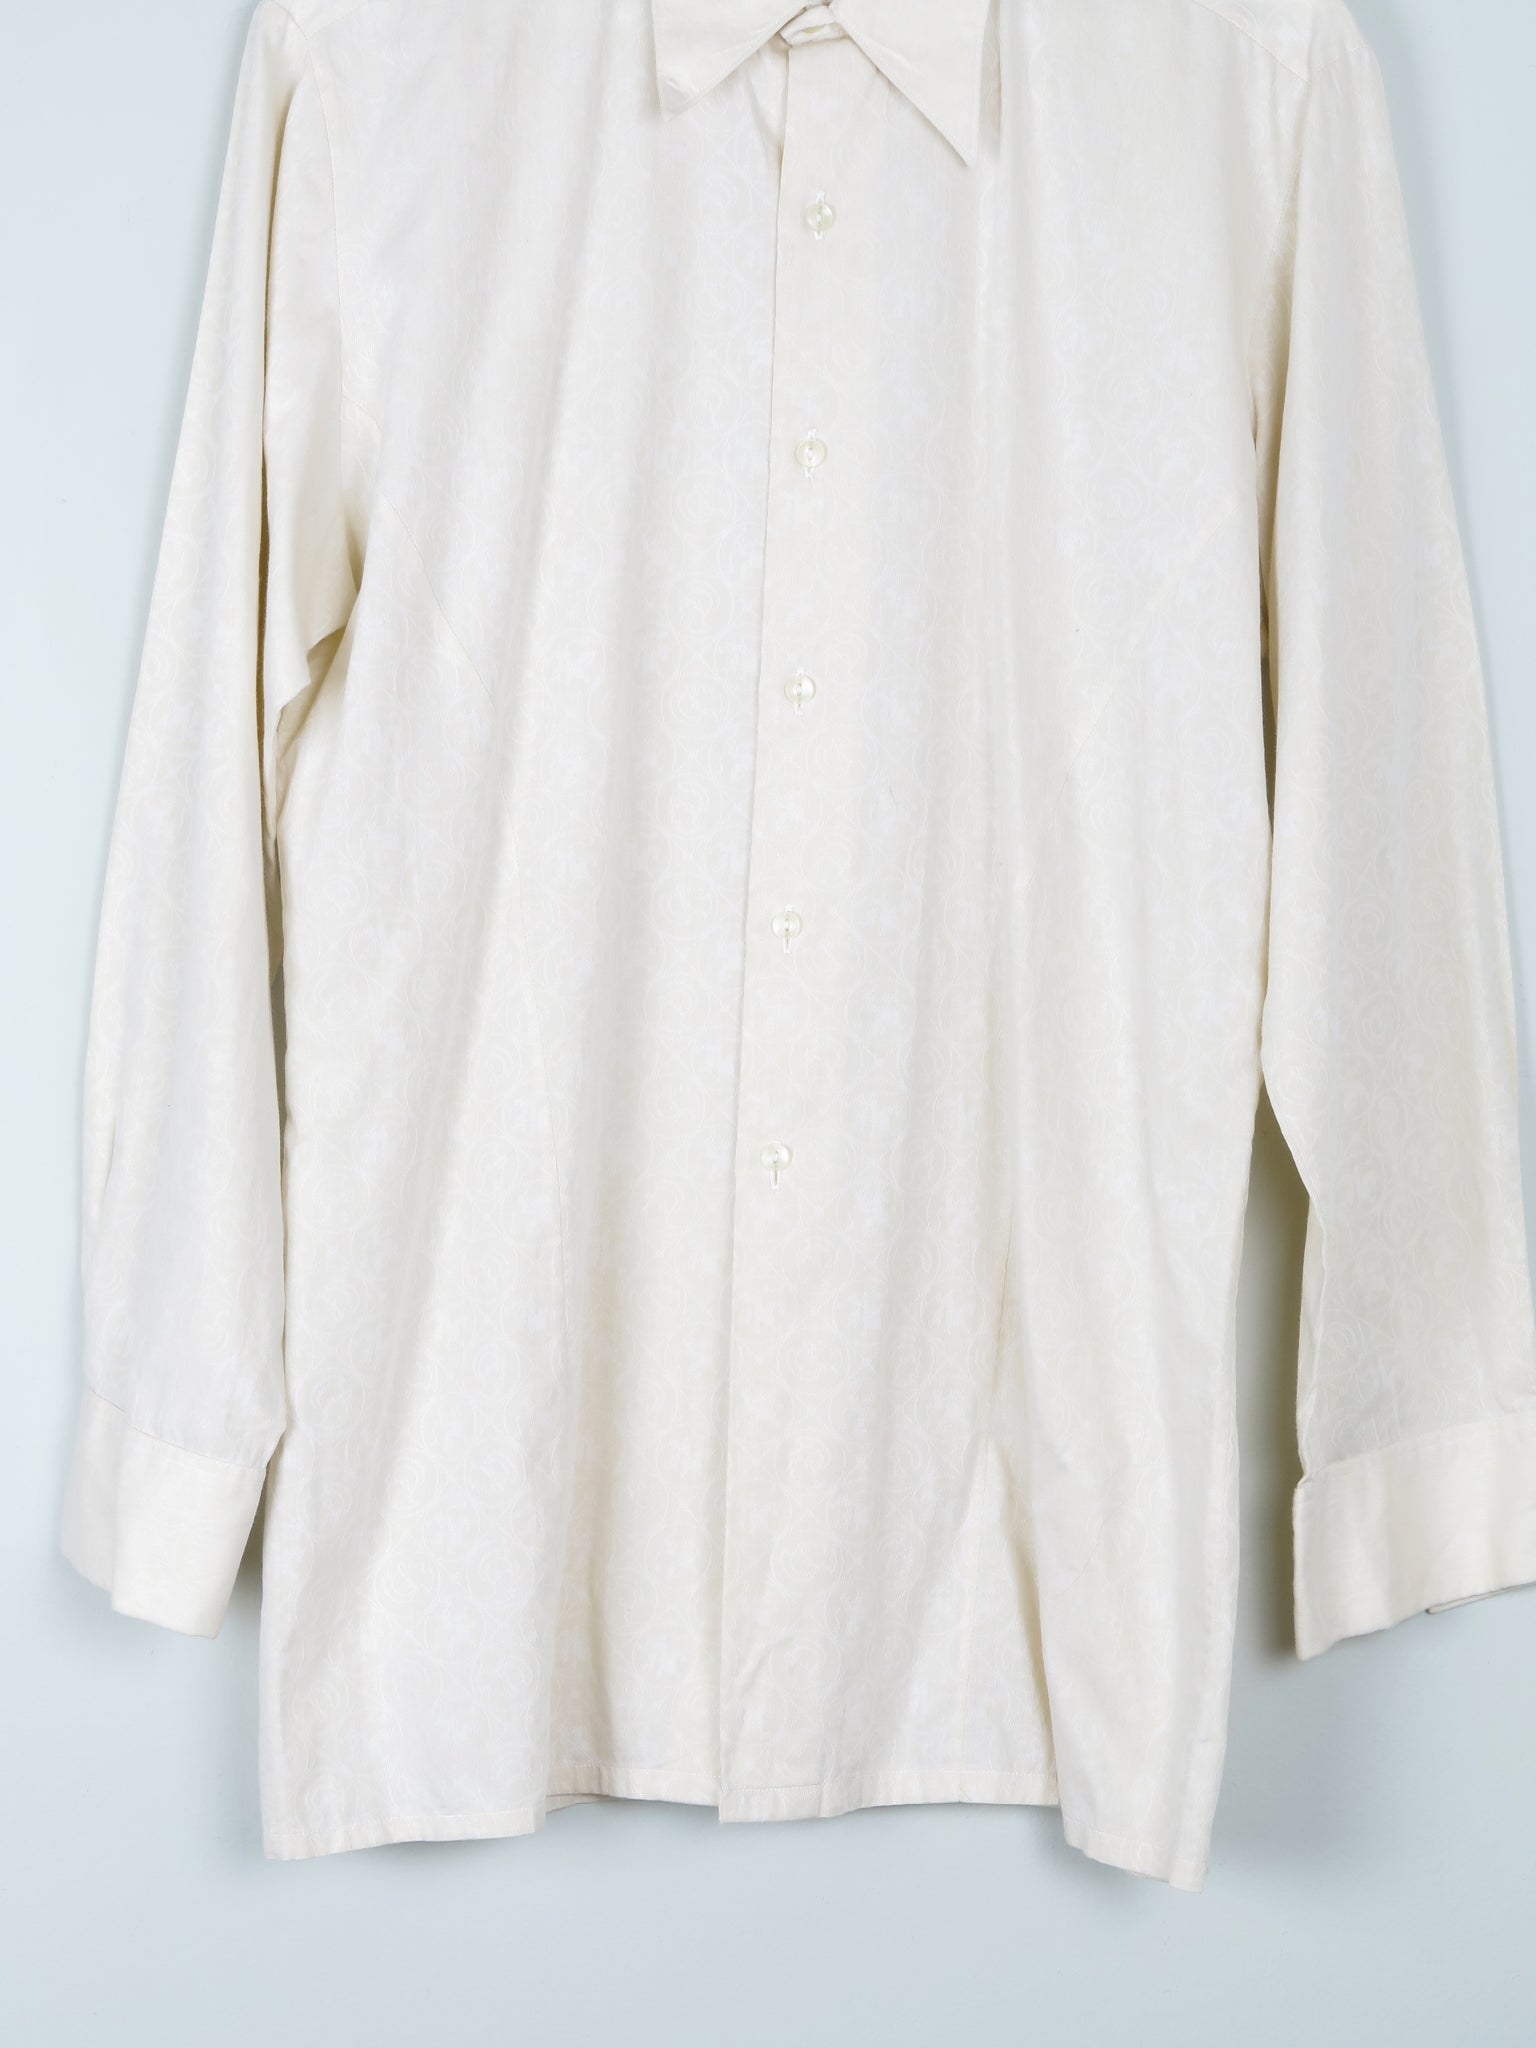 Men's Deep Cream/Buttermilk 1960s/70s Embossed Print Shirt M - The Harlequin